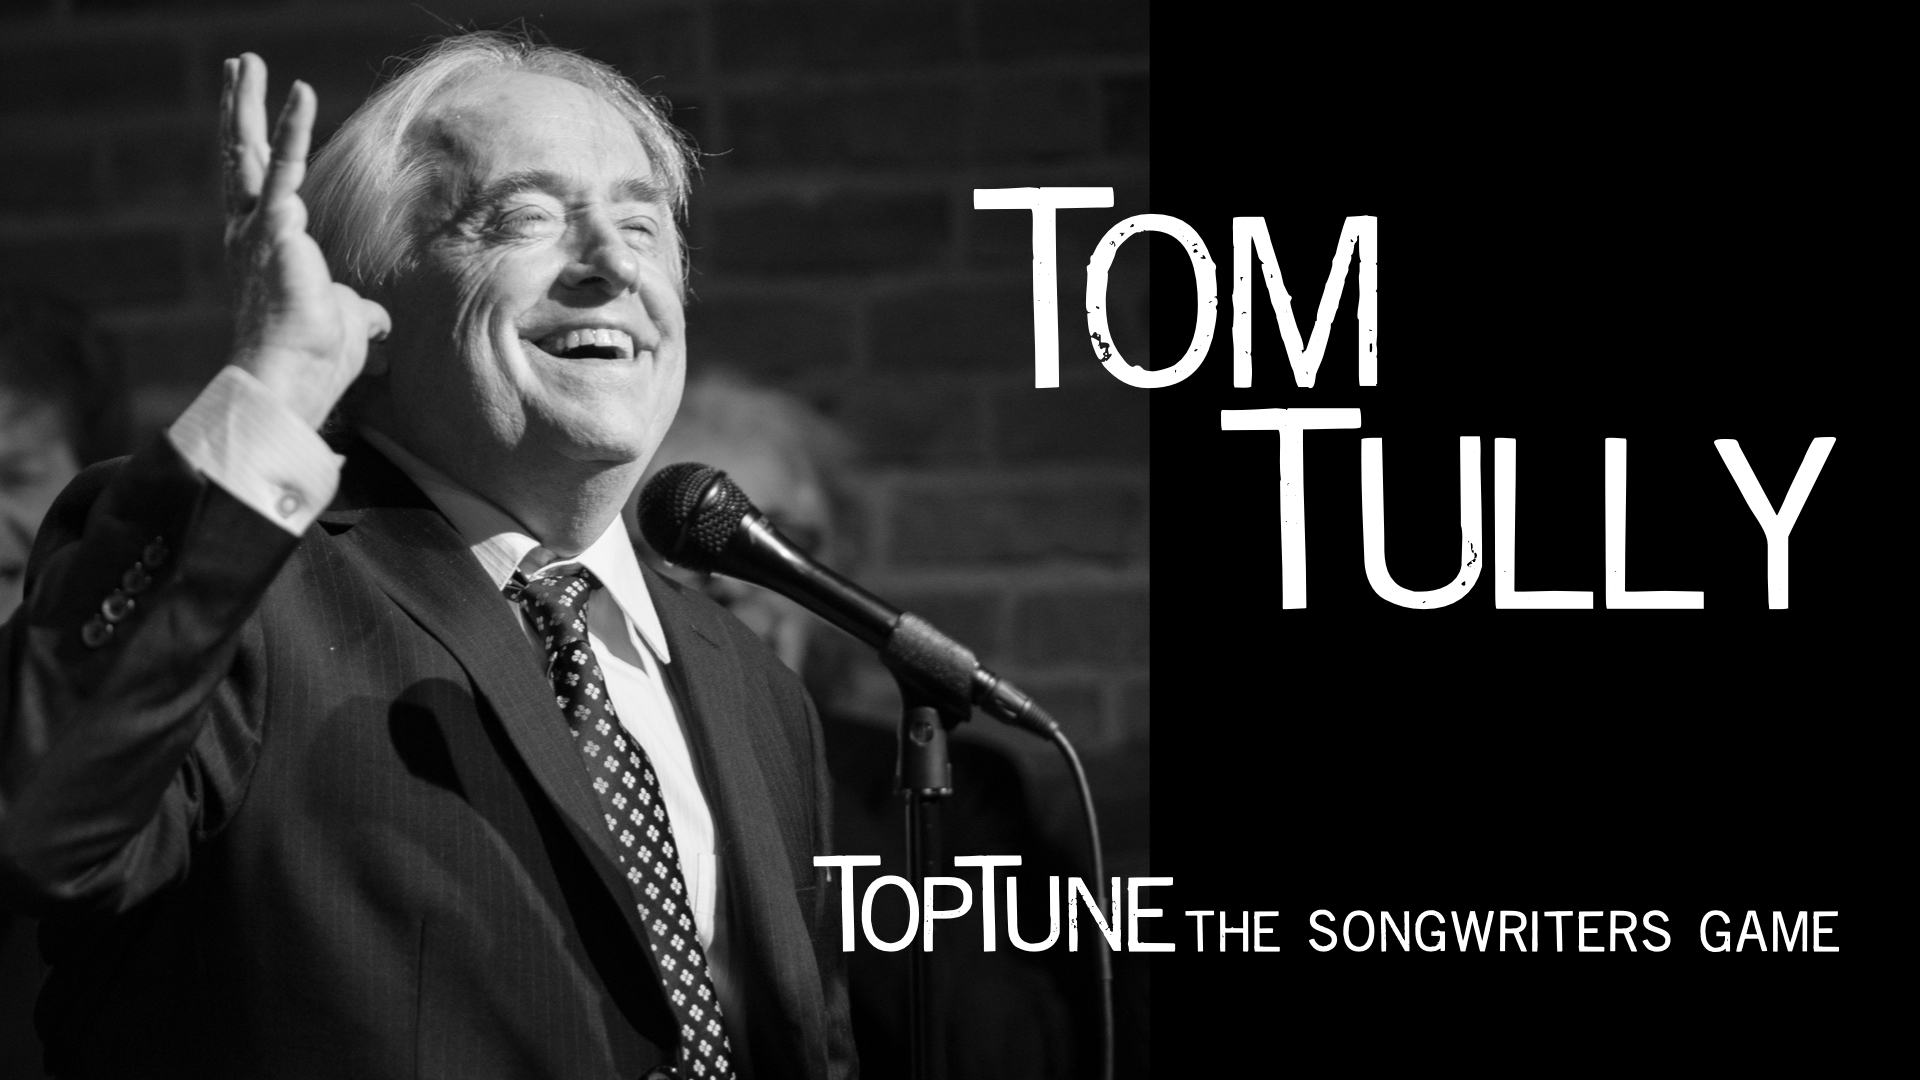 top tune, tom tully, fanatic salon, music show